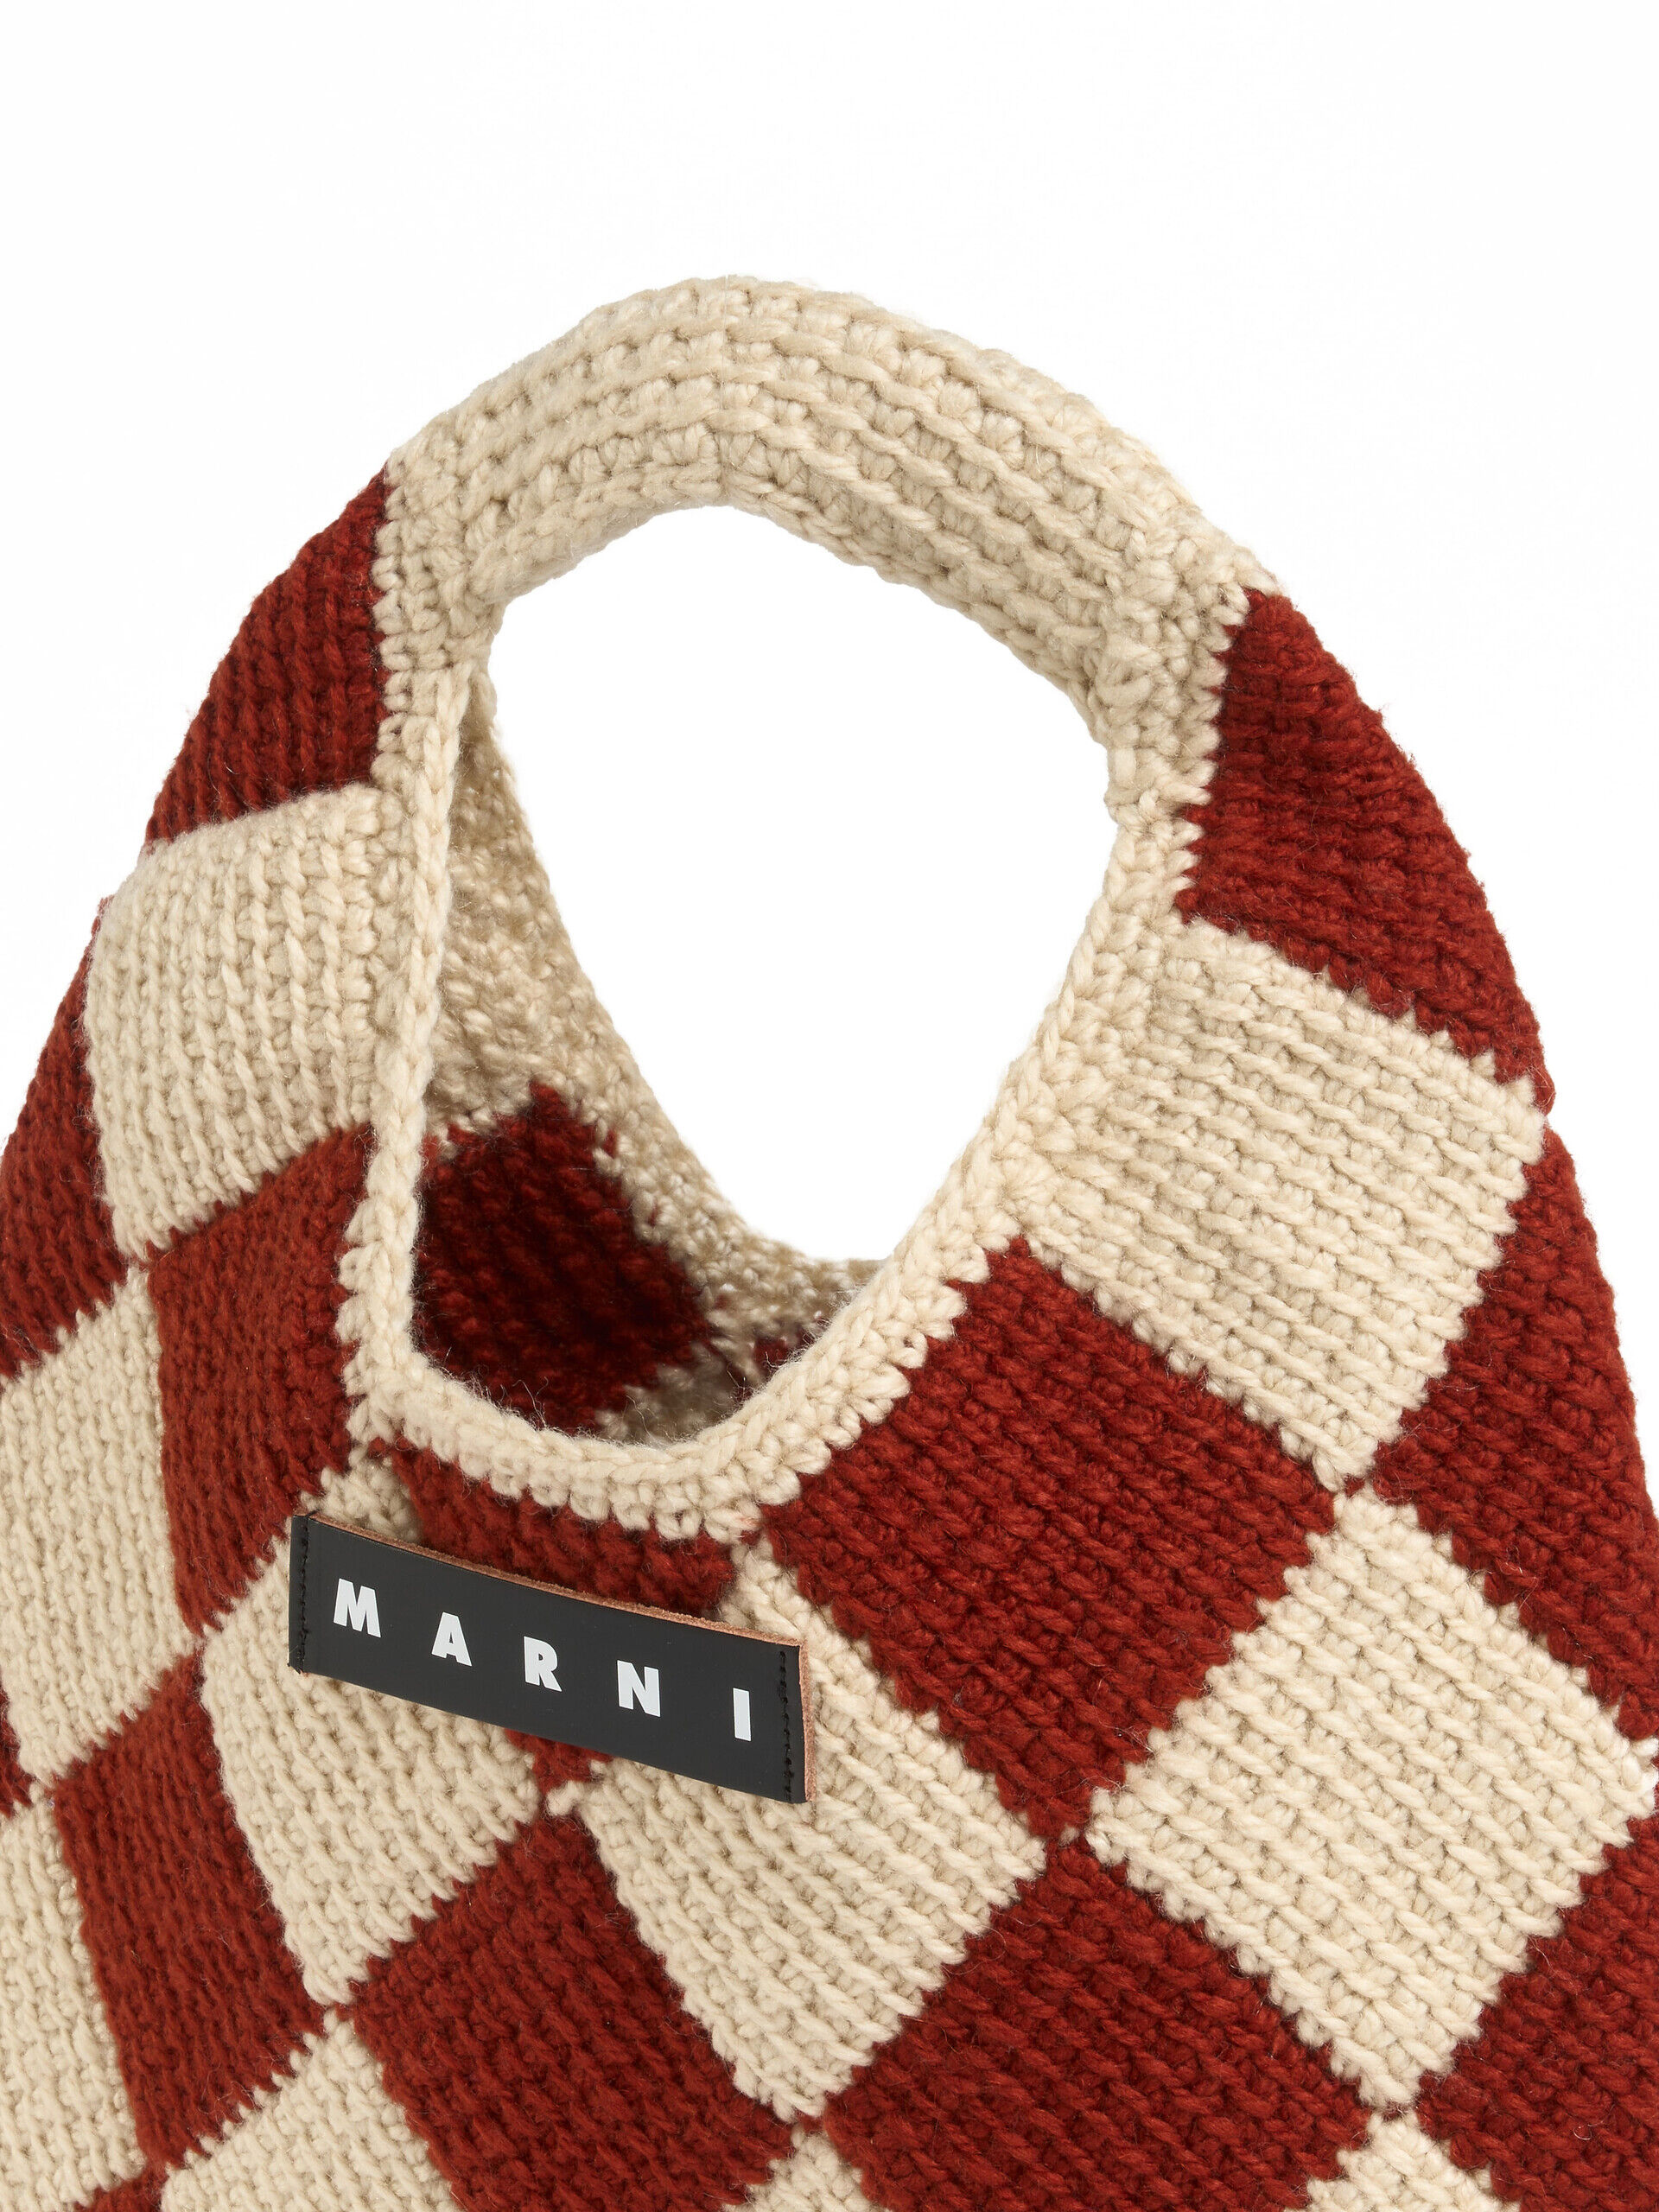 MARNI MARKET DIAMOND medium bag in red and beige tech wool | Marni